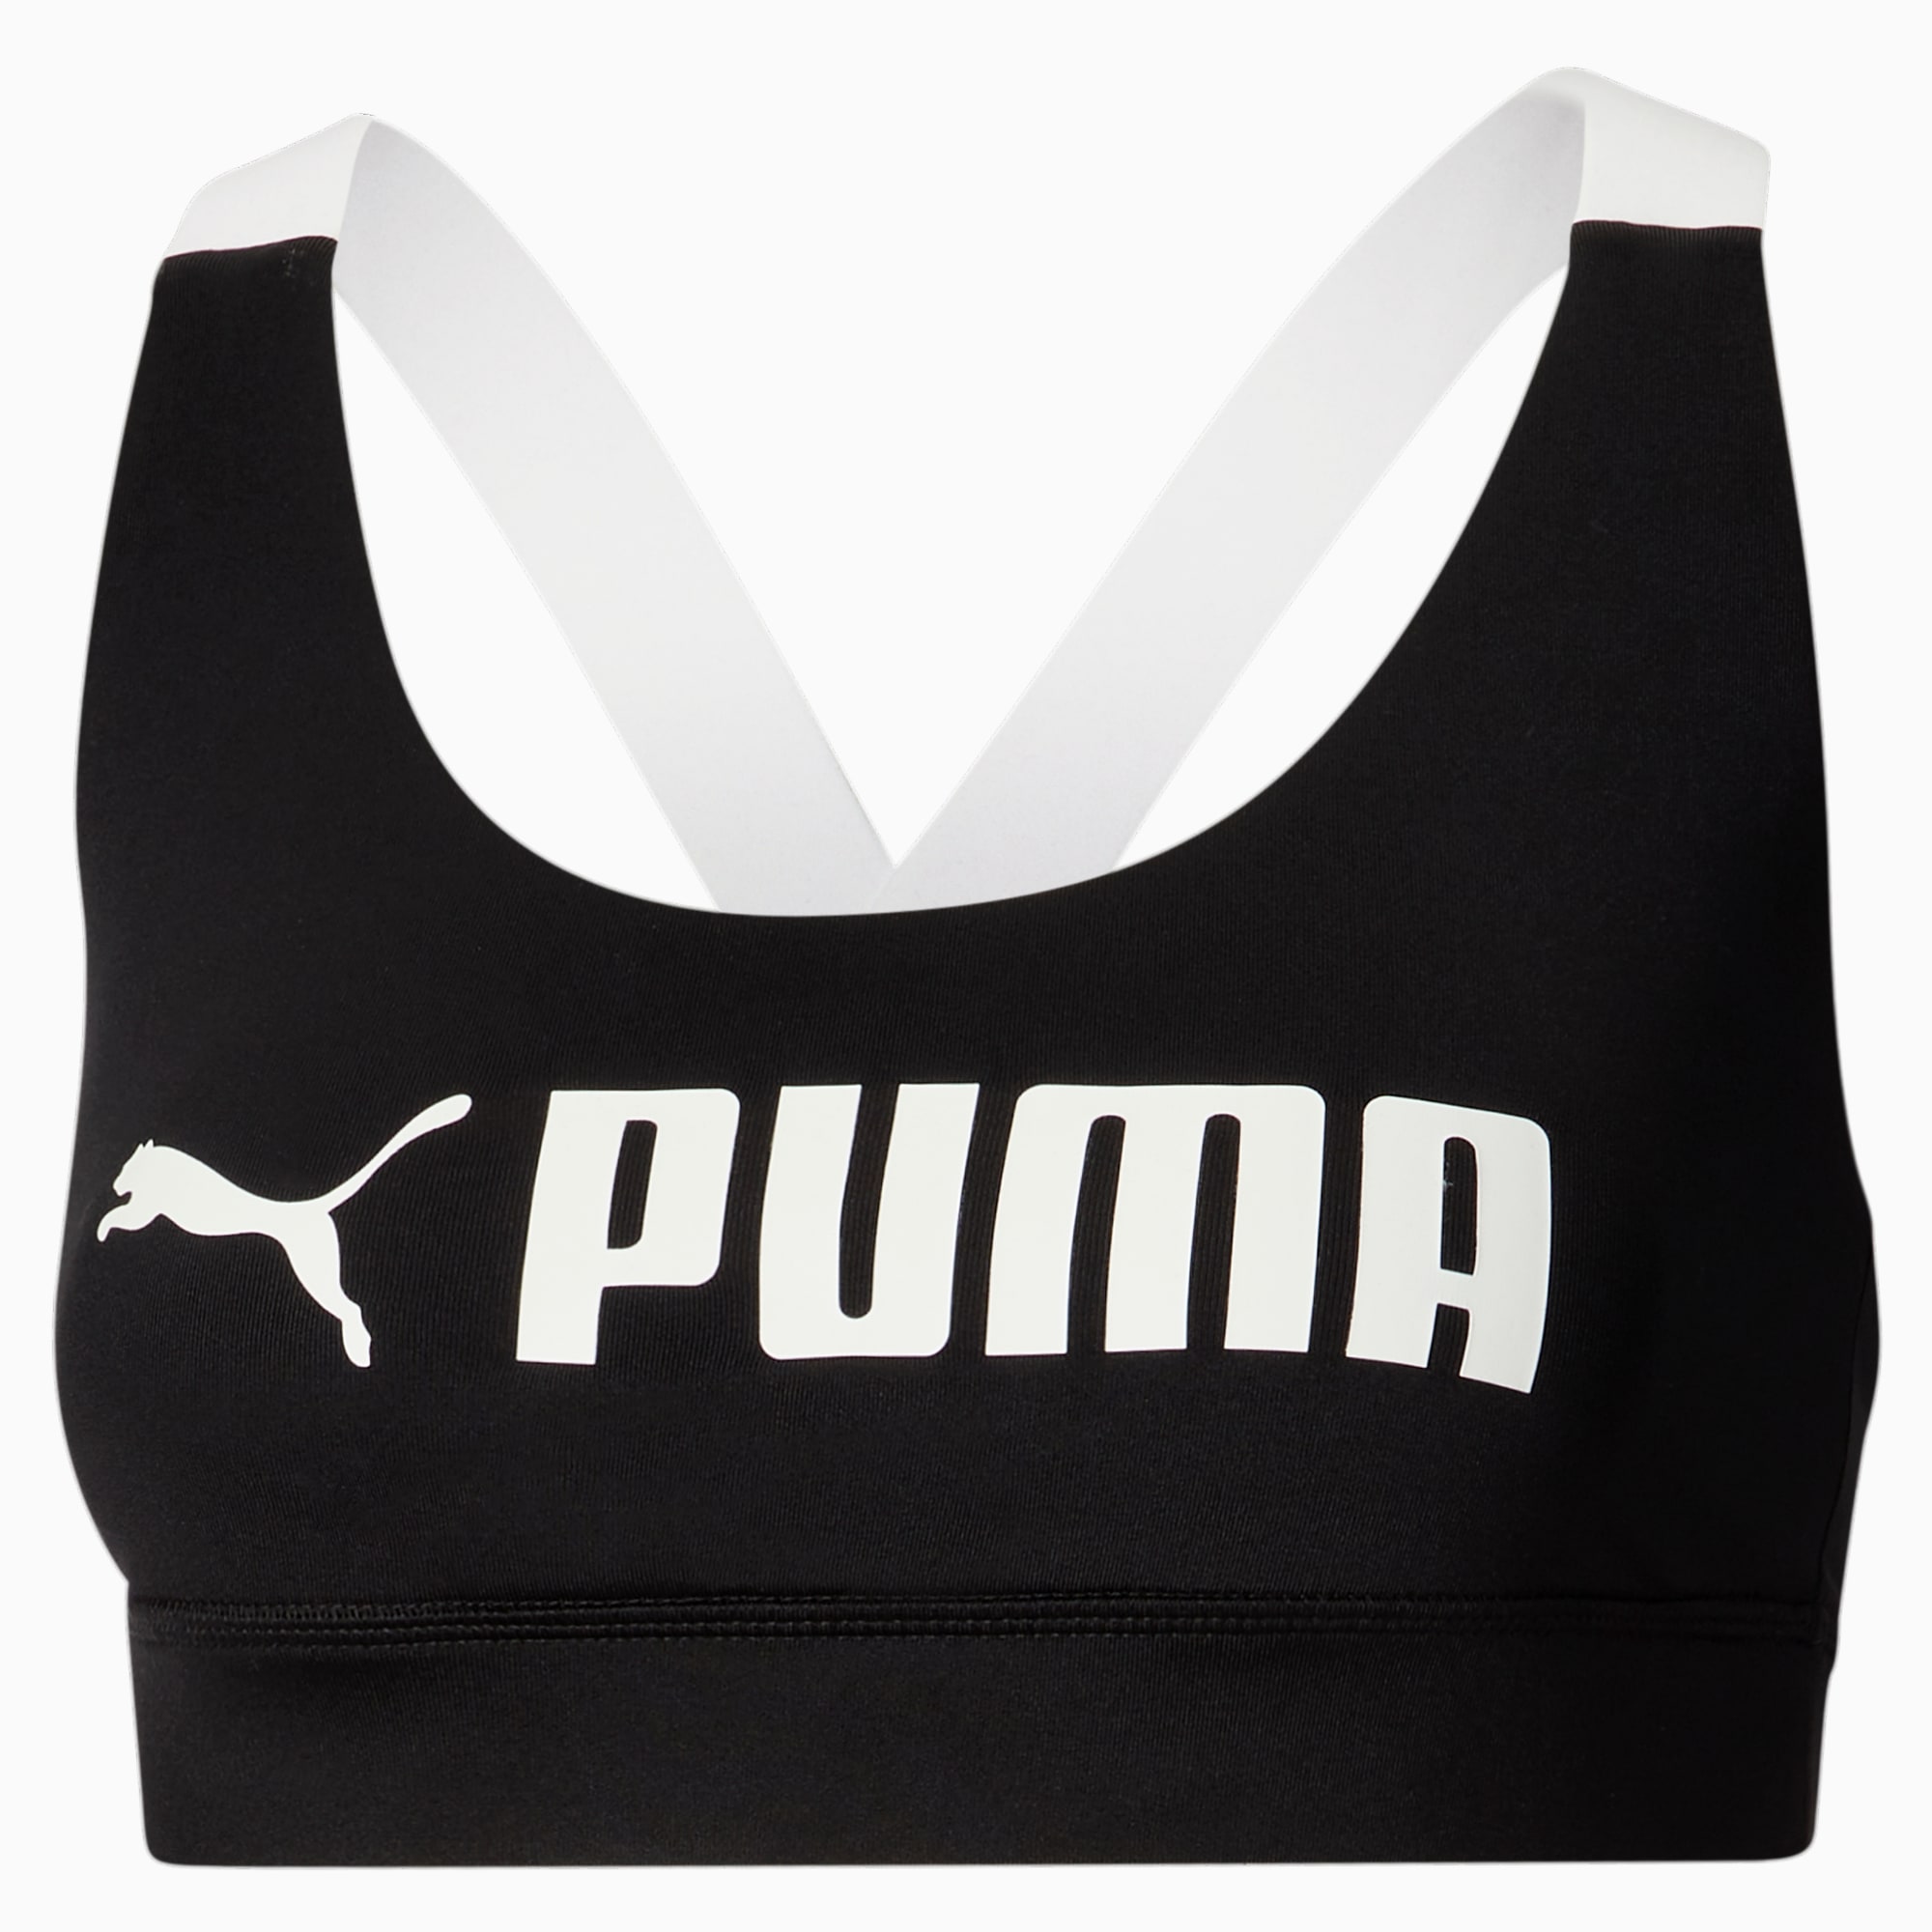 Puma, Ultrafoam Bra Ld34, High Impact Sports Bras